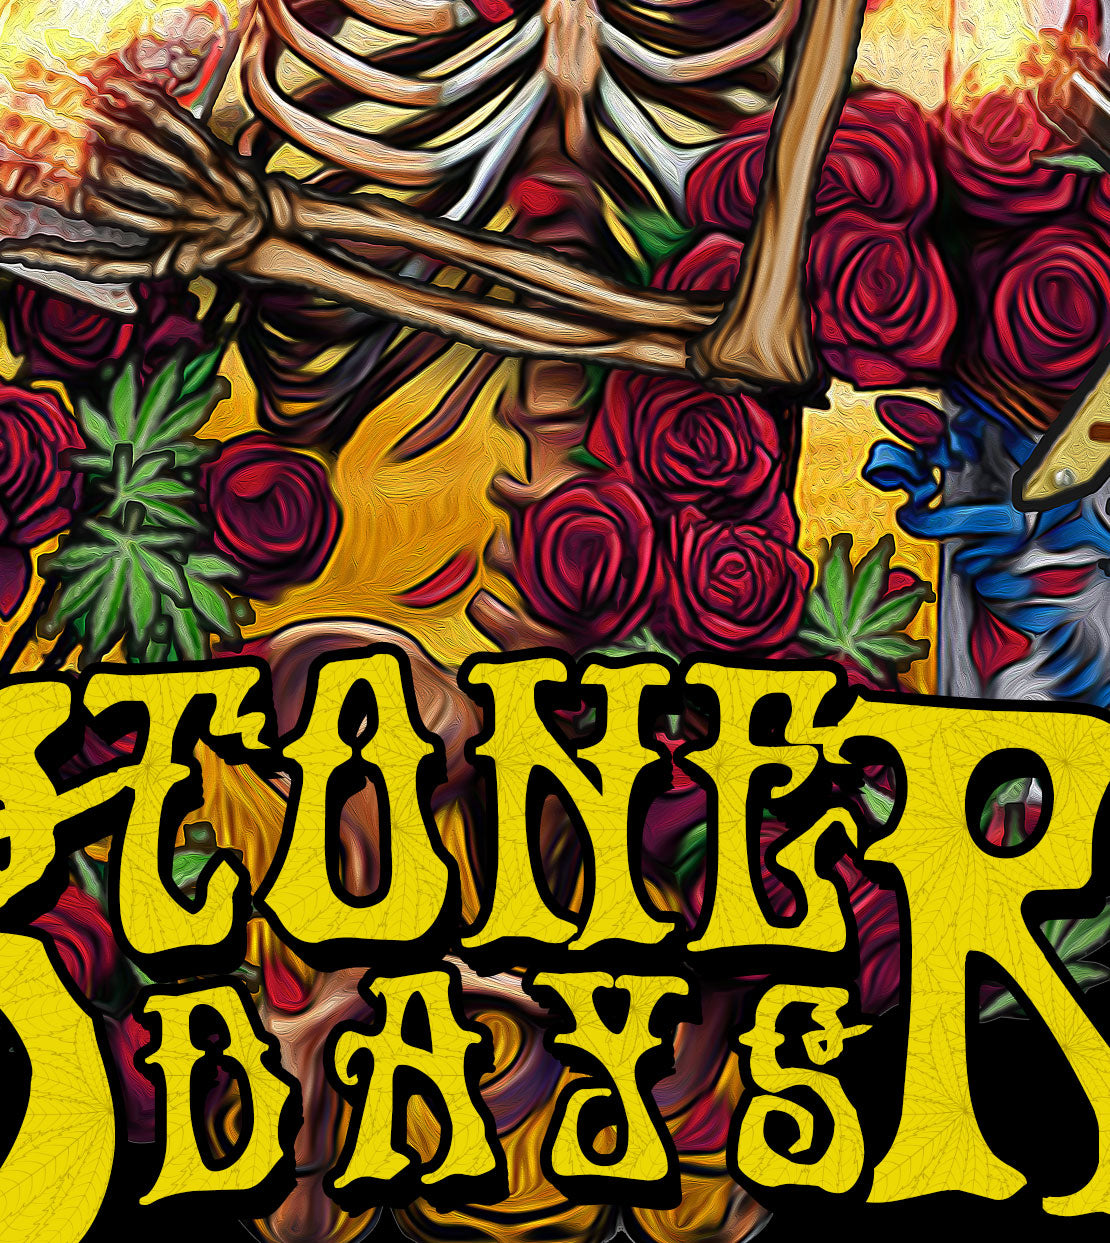 StonerDays Grateful Dabs Tee with vibrant tie-dye design and skeleton graphic, 100% cotton